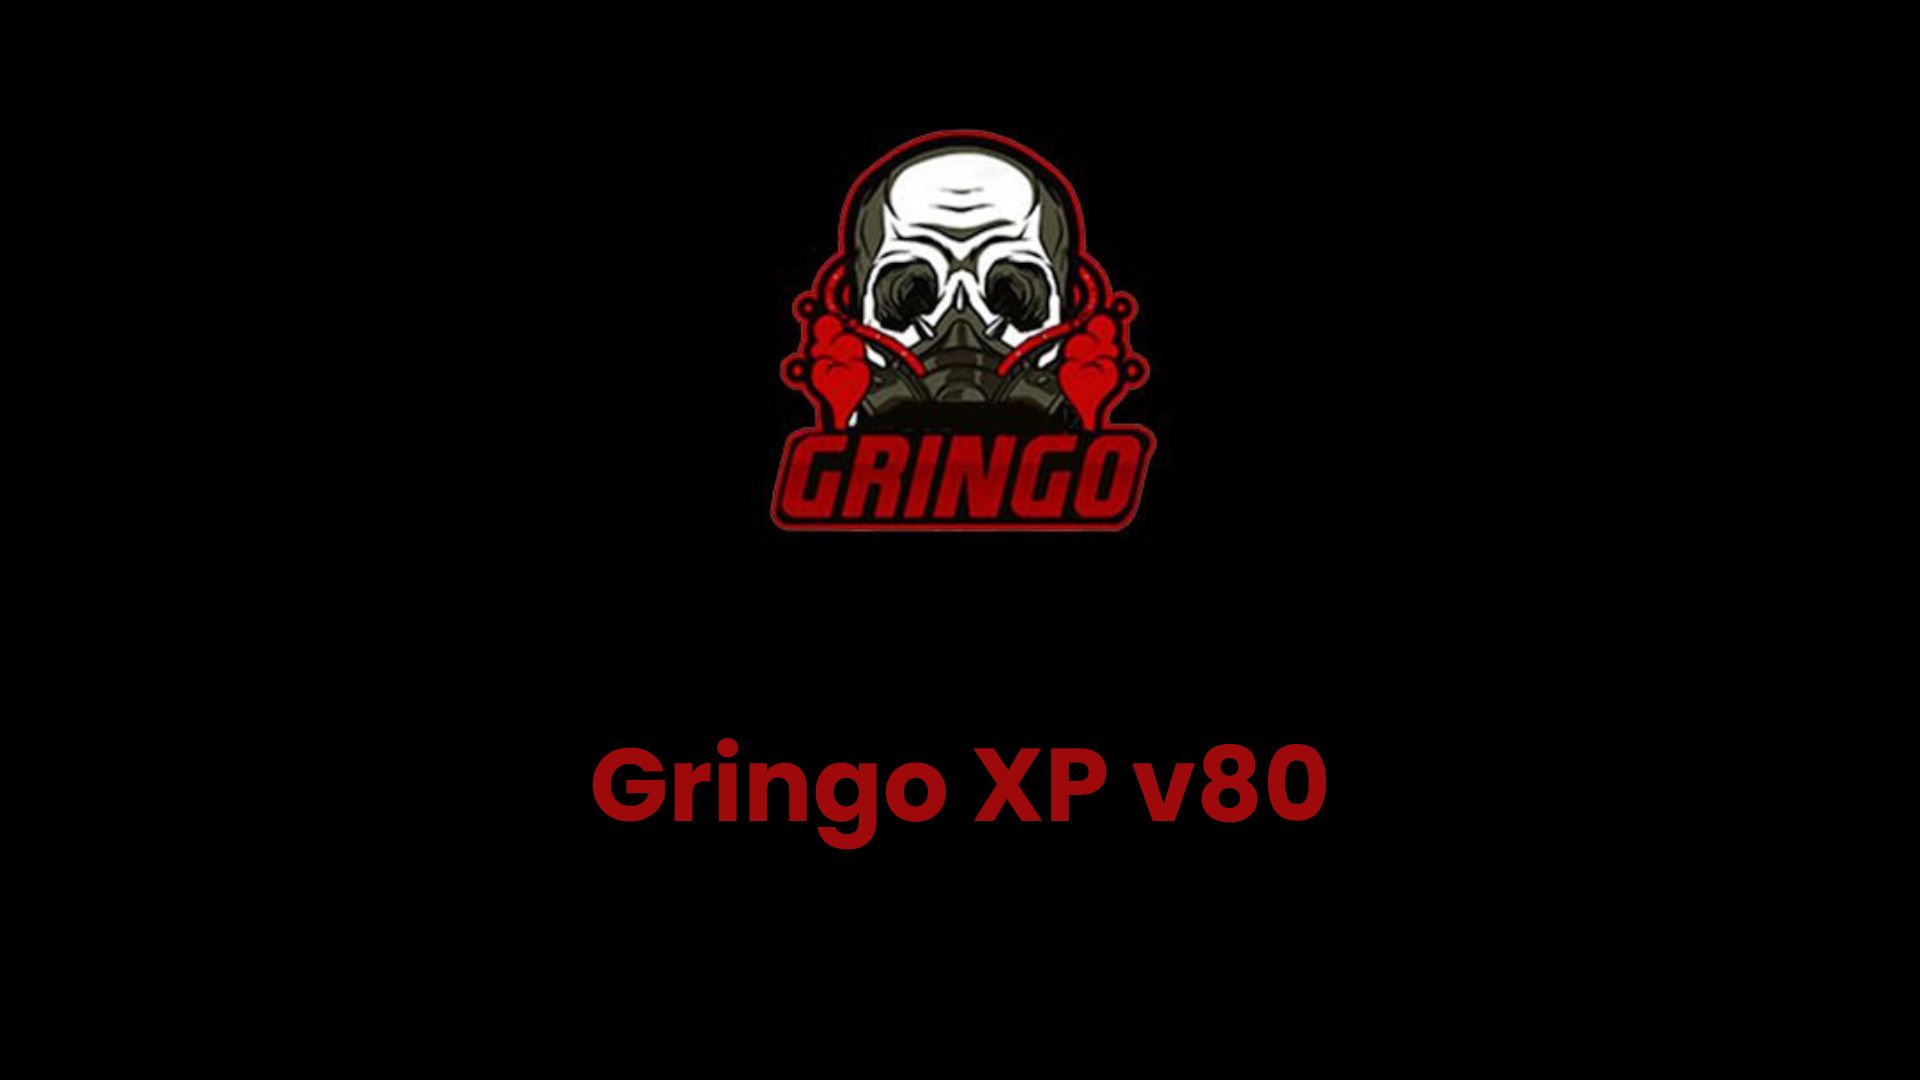 Gringo XP v80